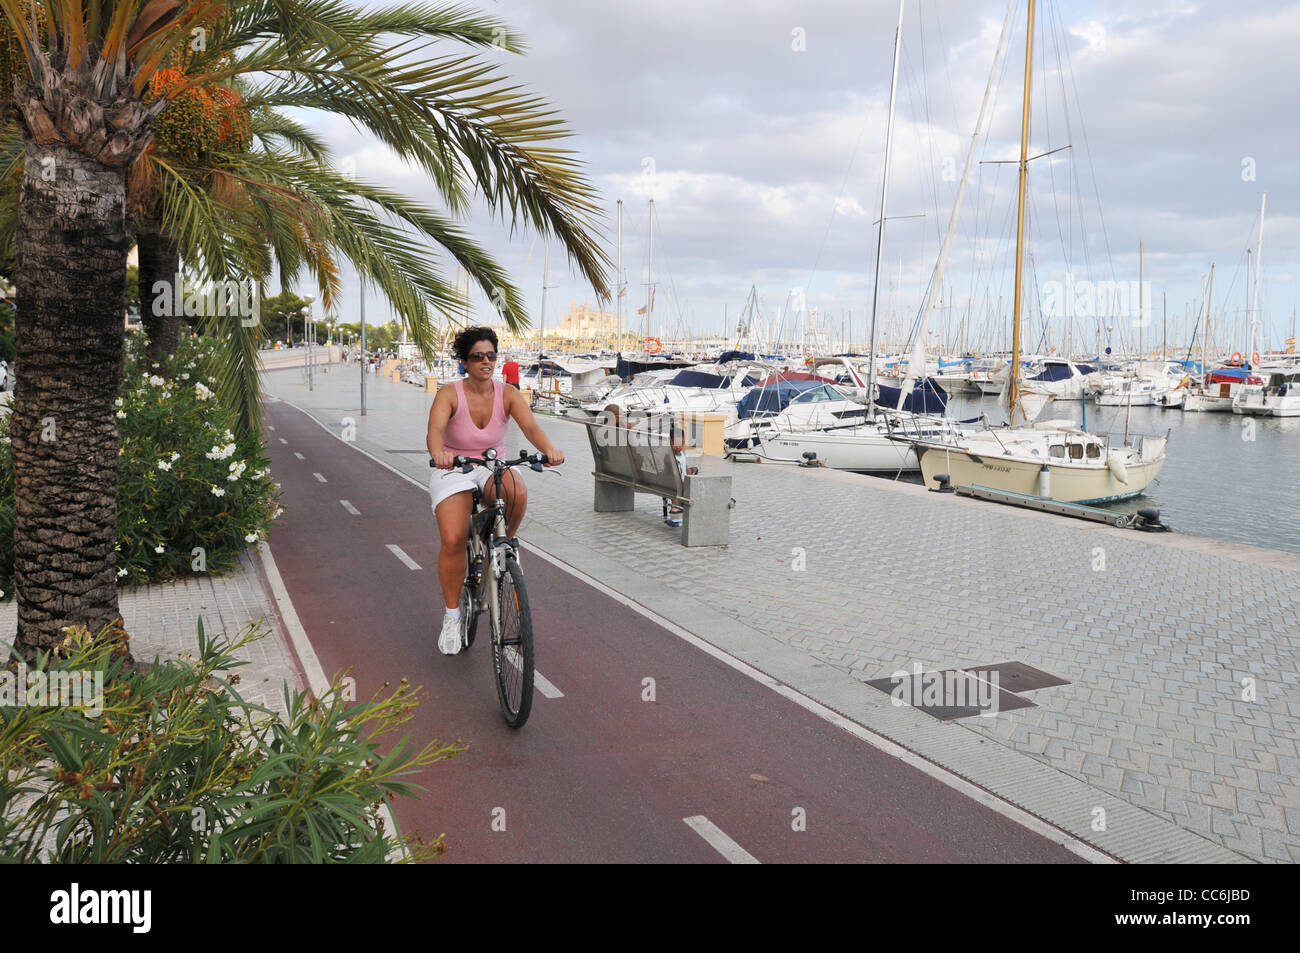 A woman cycles along the cycle lane in Palma, Mallorca Stock Photo